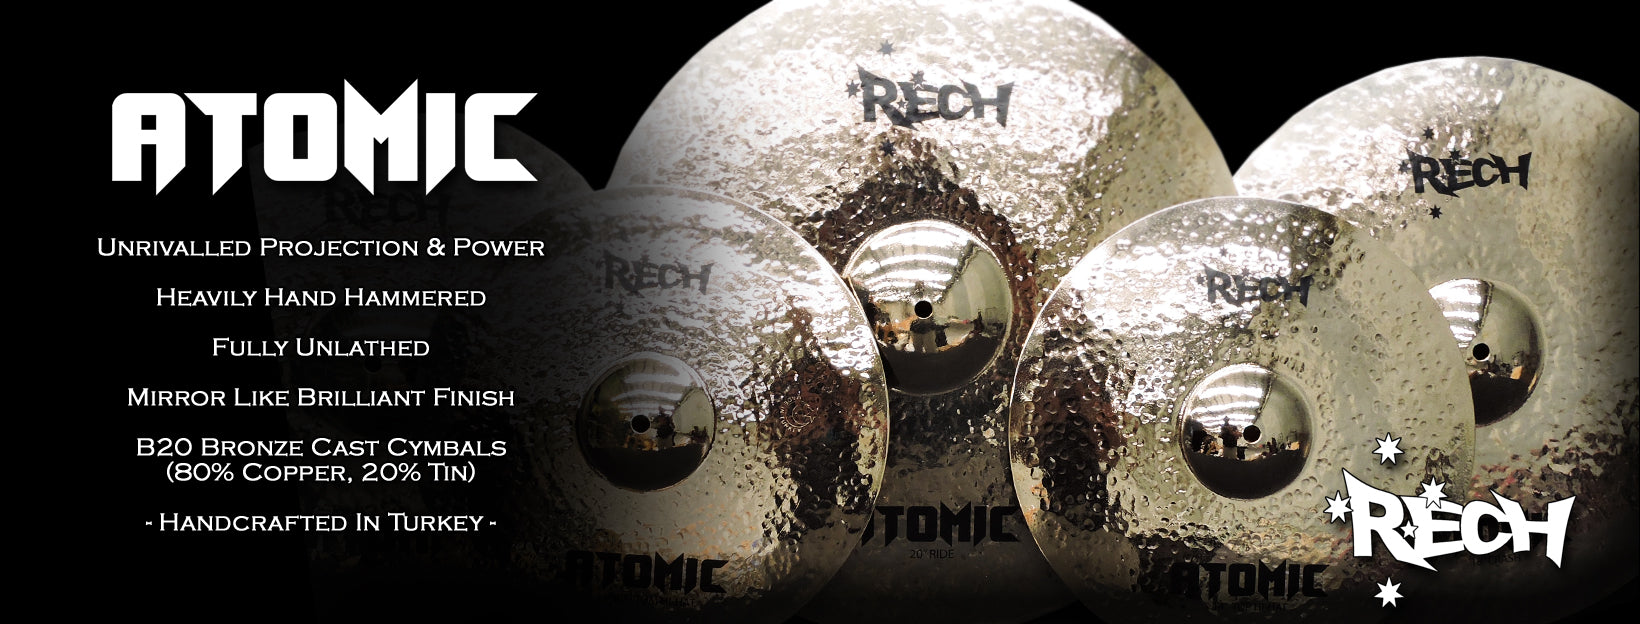 Rech Atomic Cymbals Pack